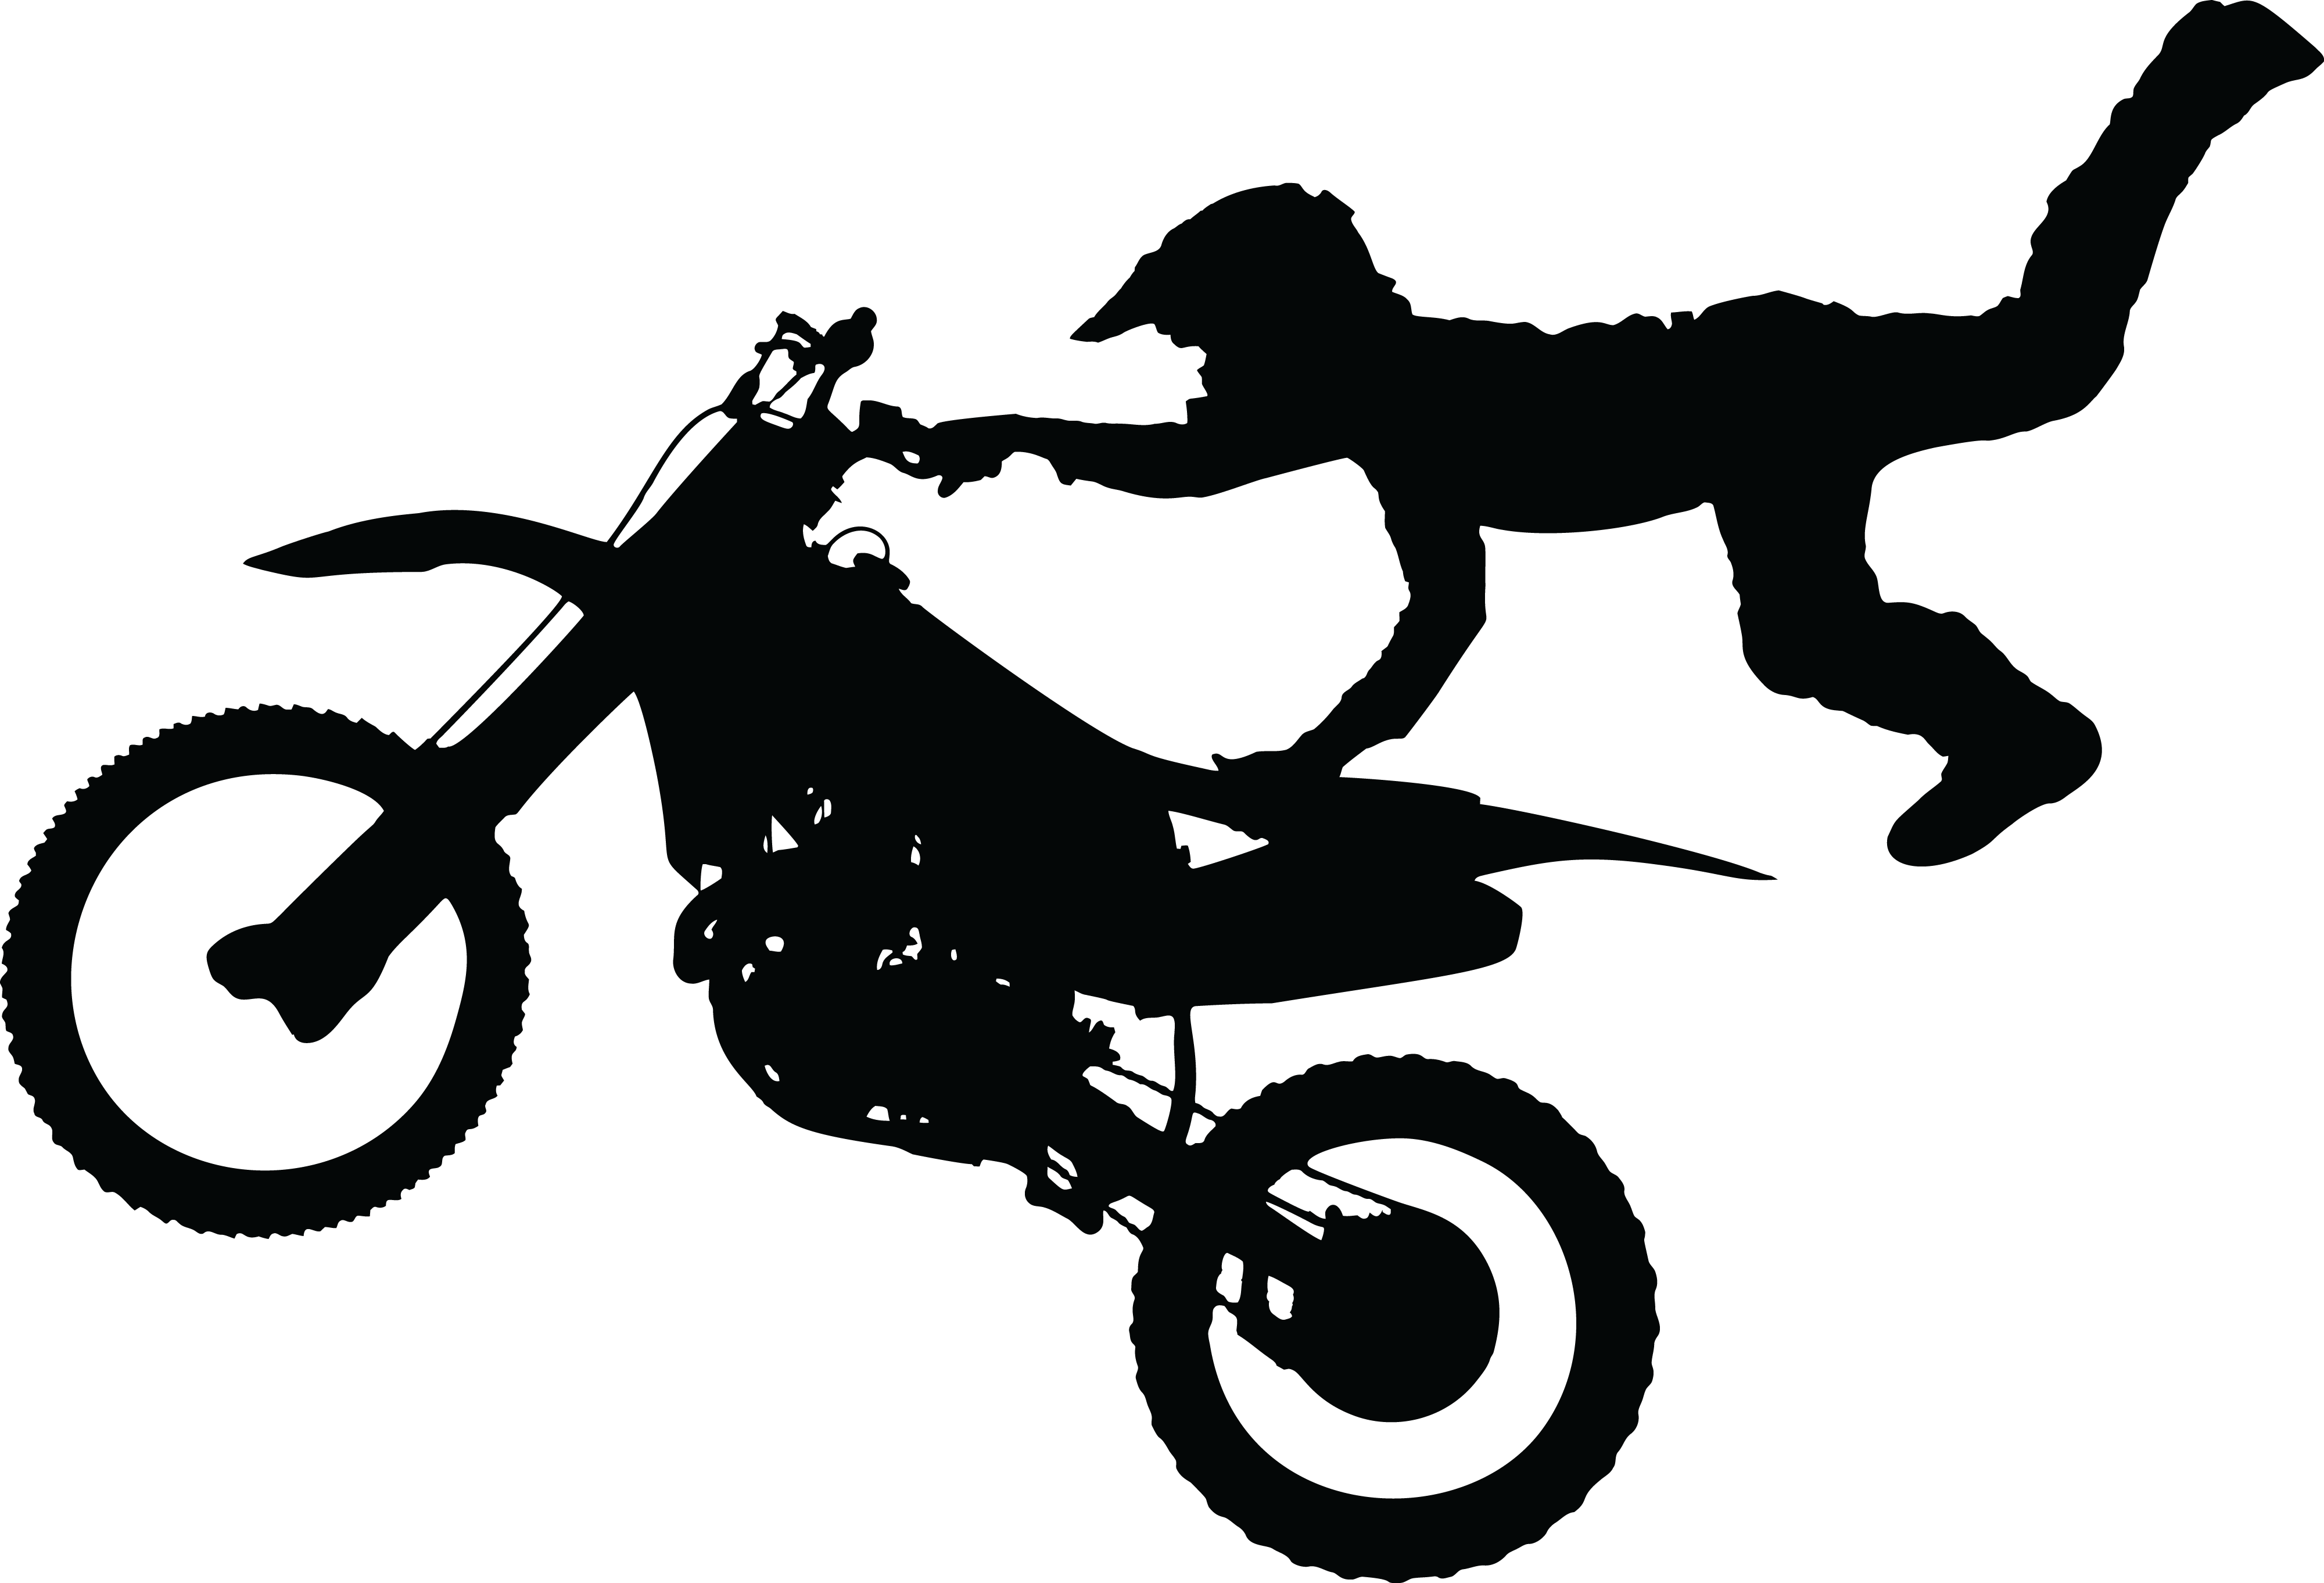 Motocross Transparent PNG Sti